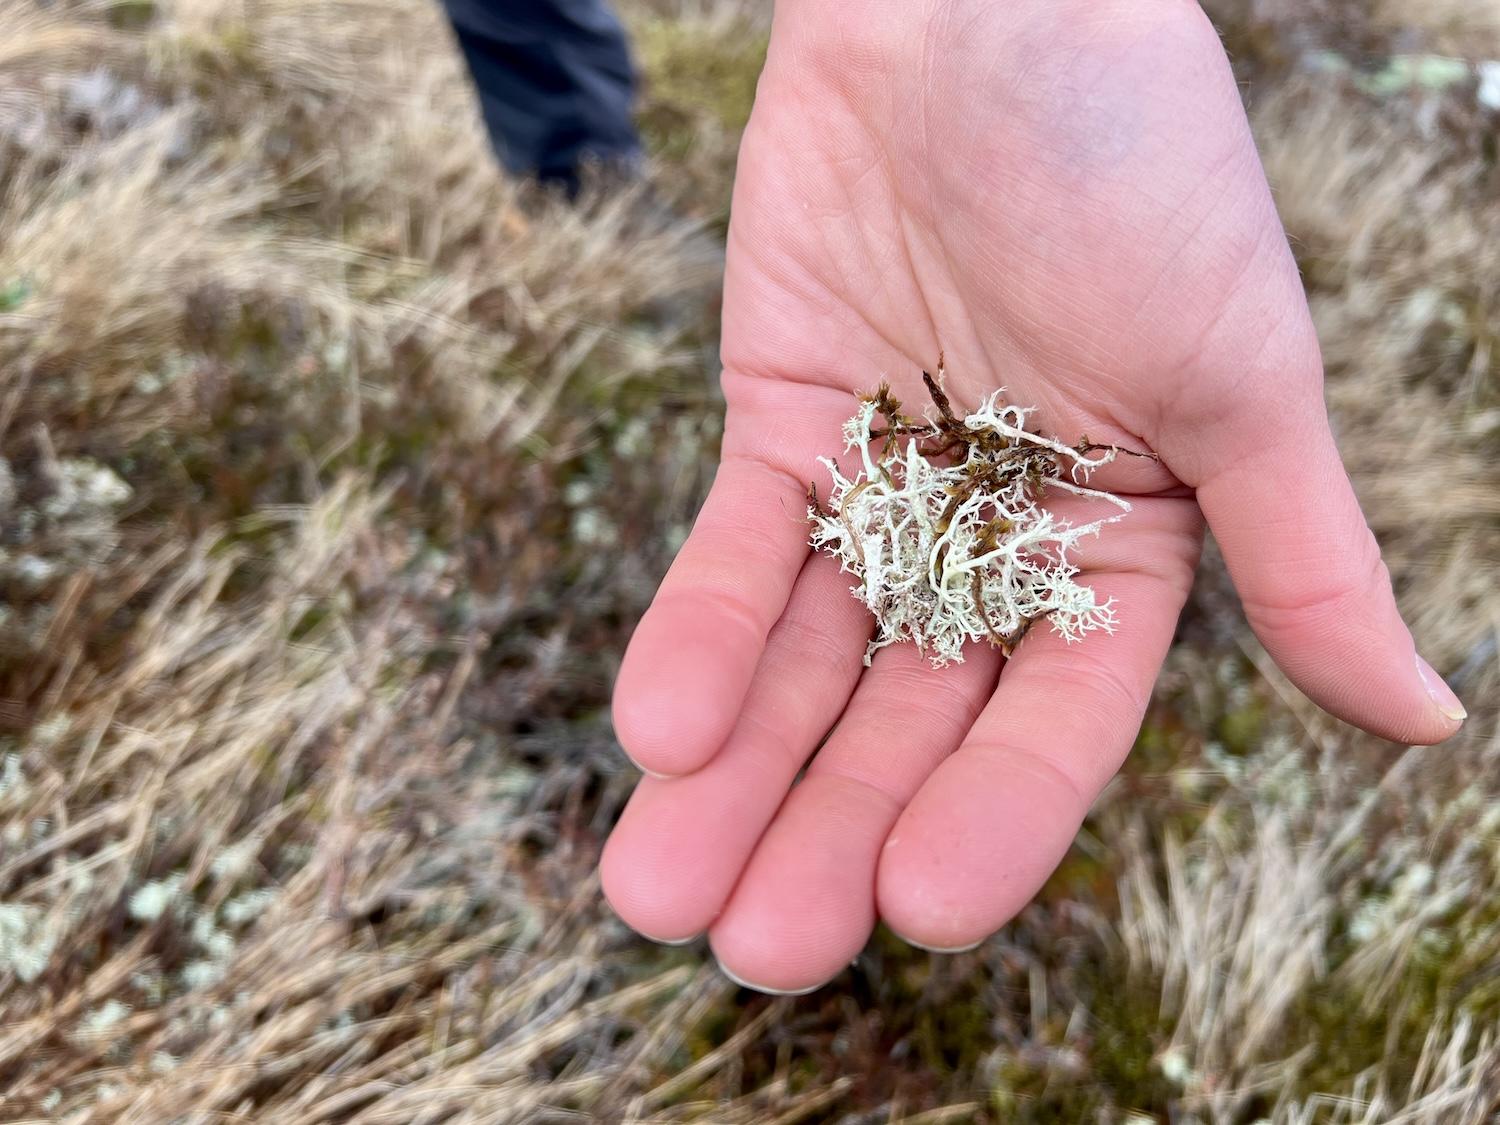 Reindeer moss (aka reindeer lichen) is the reindeer's favorite food and sustains them through winter.